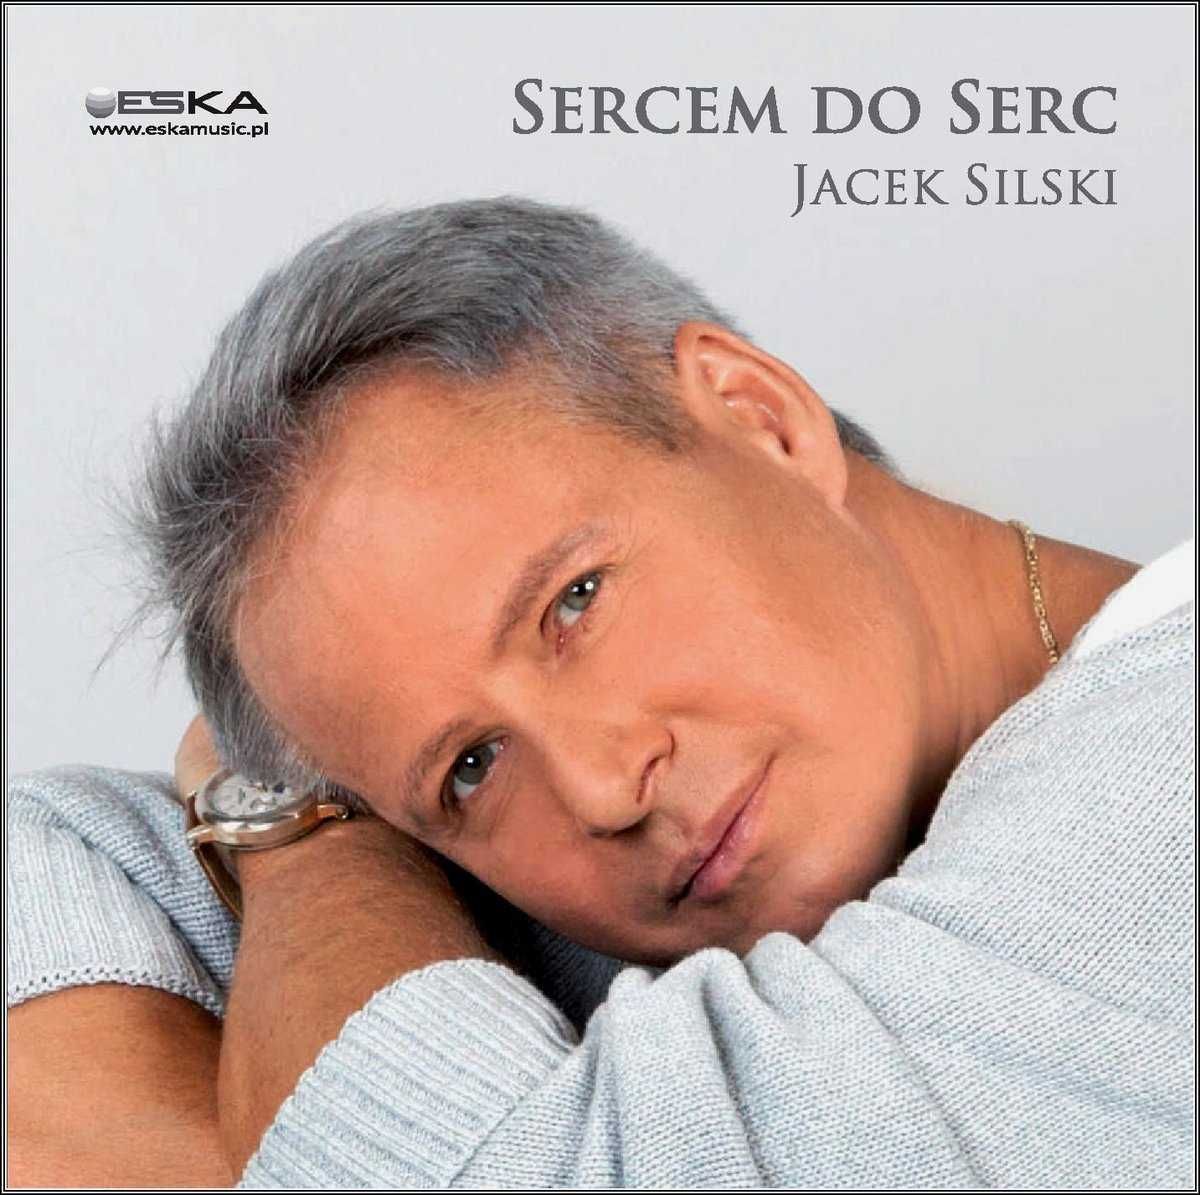 Jacek Silski - Sercem do serc (CD)